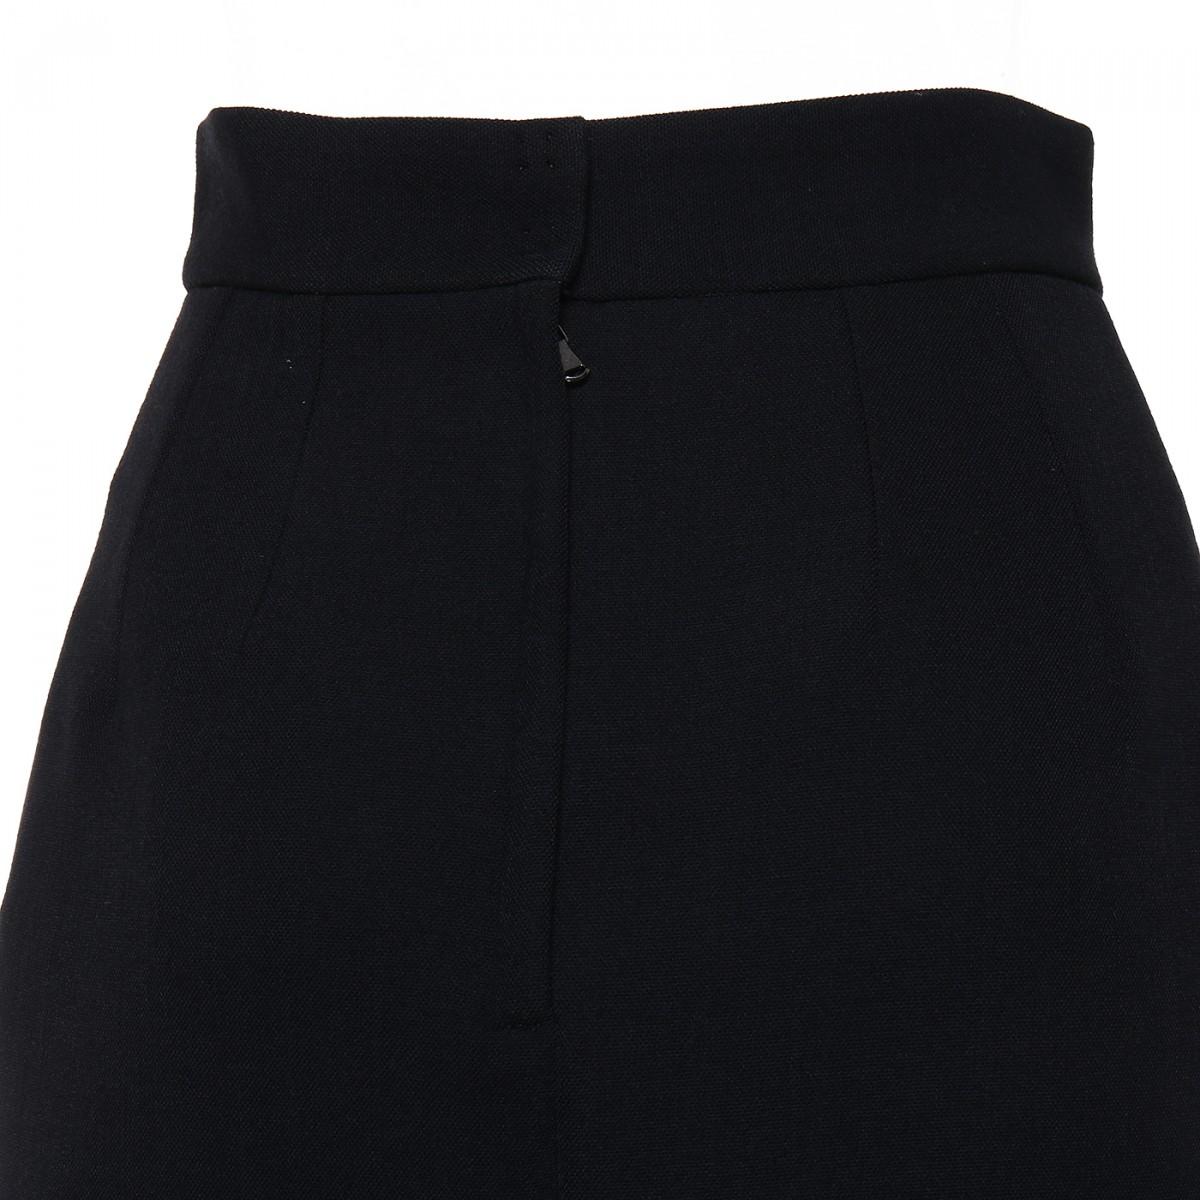 Dolce & Gabbana Silk Pencil Midi Skirt in Nero (Black) - Lyst